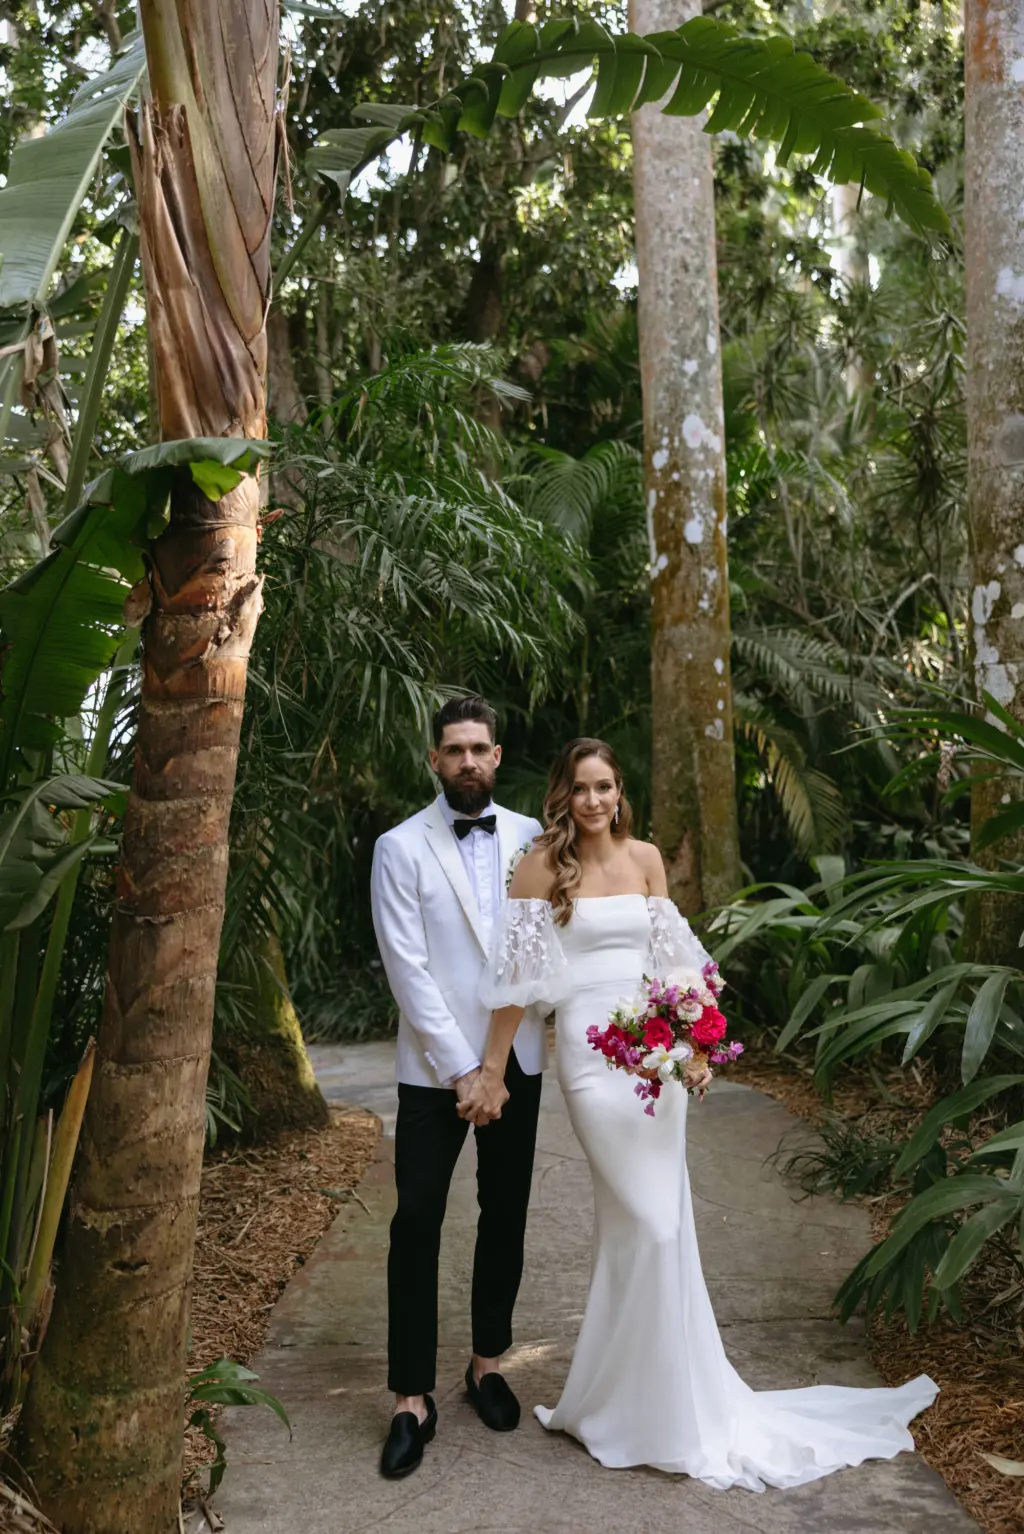 Bride and Groom Garden Wedding Portrait | St. Petersburg Florida Event Venue Sunken Gardens | Black and White Groom Tuxedo Suit with Bowtie | Tampa Bay Wedding Planner Wilder Mind Events